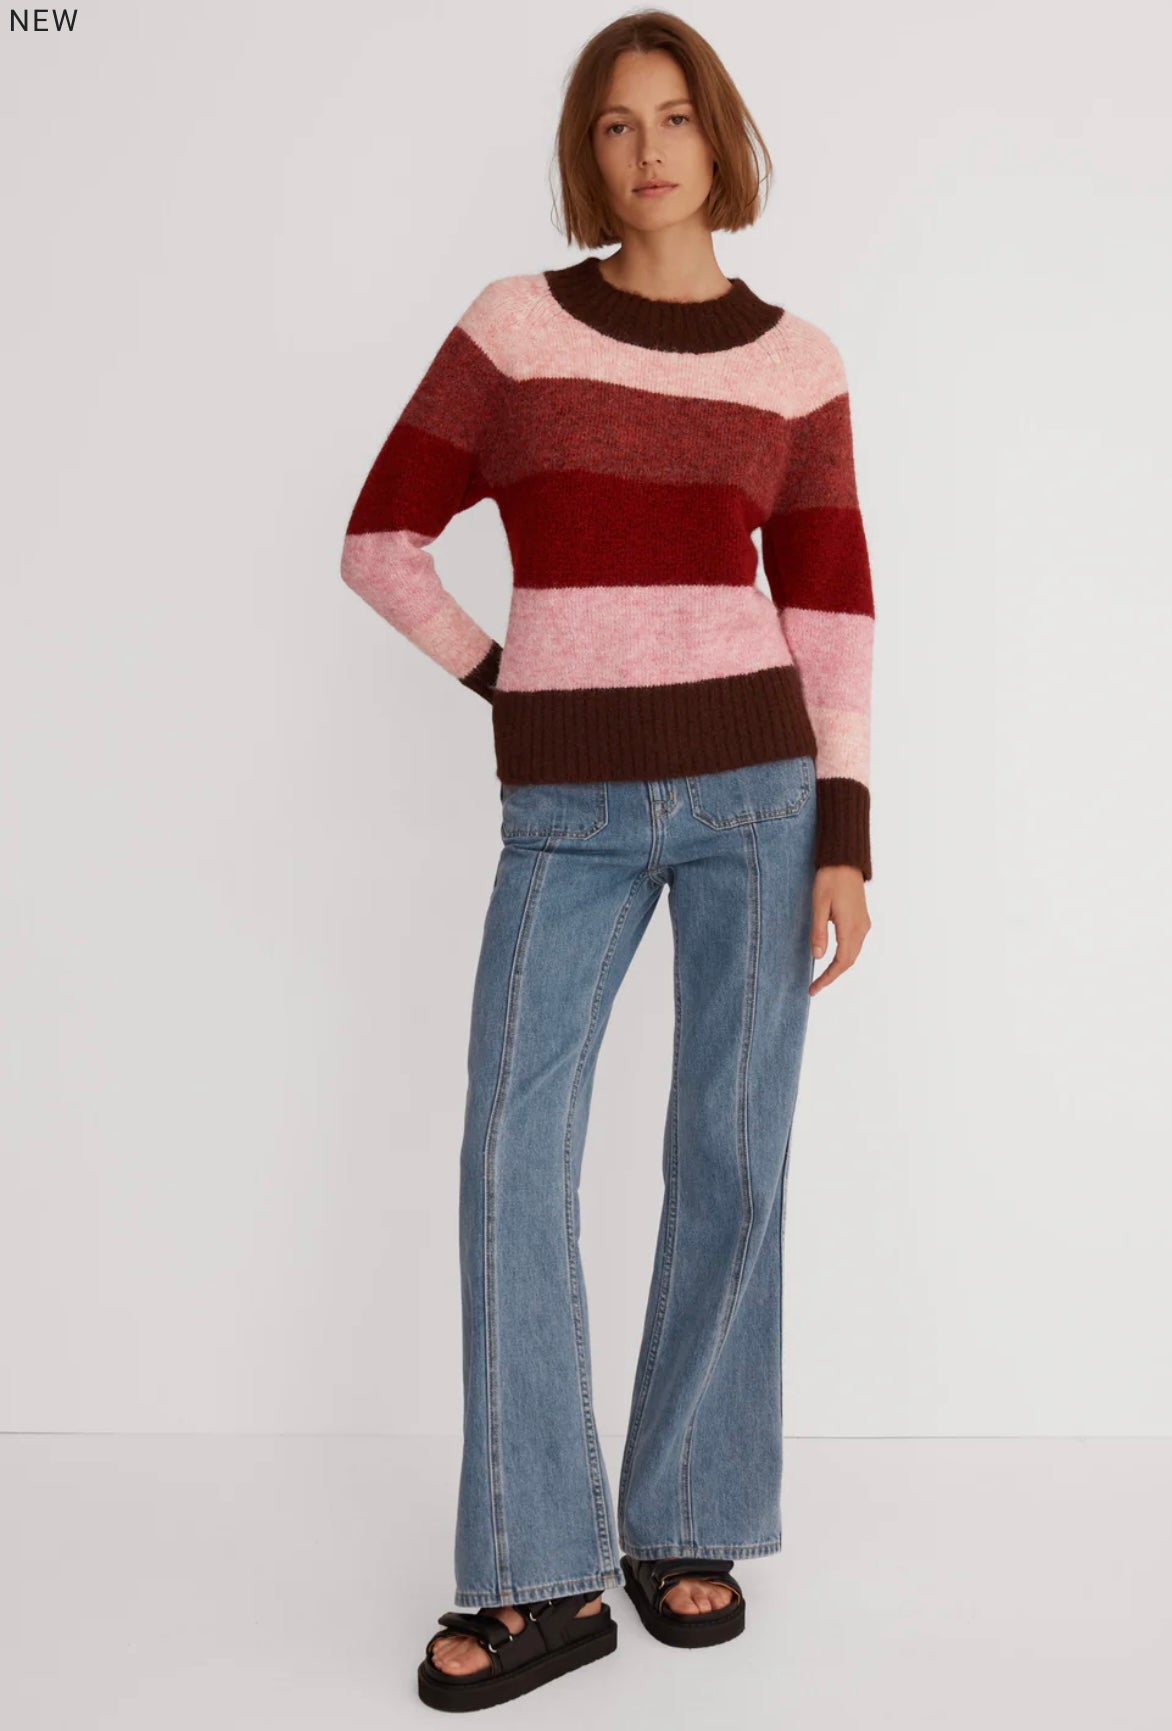 Morrison Stassie Stripe Pullover